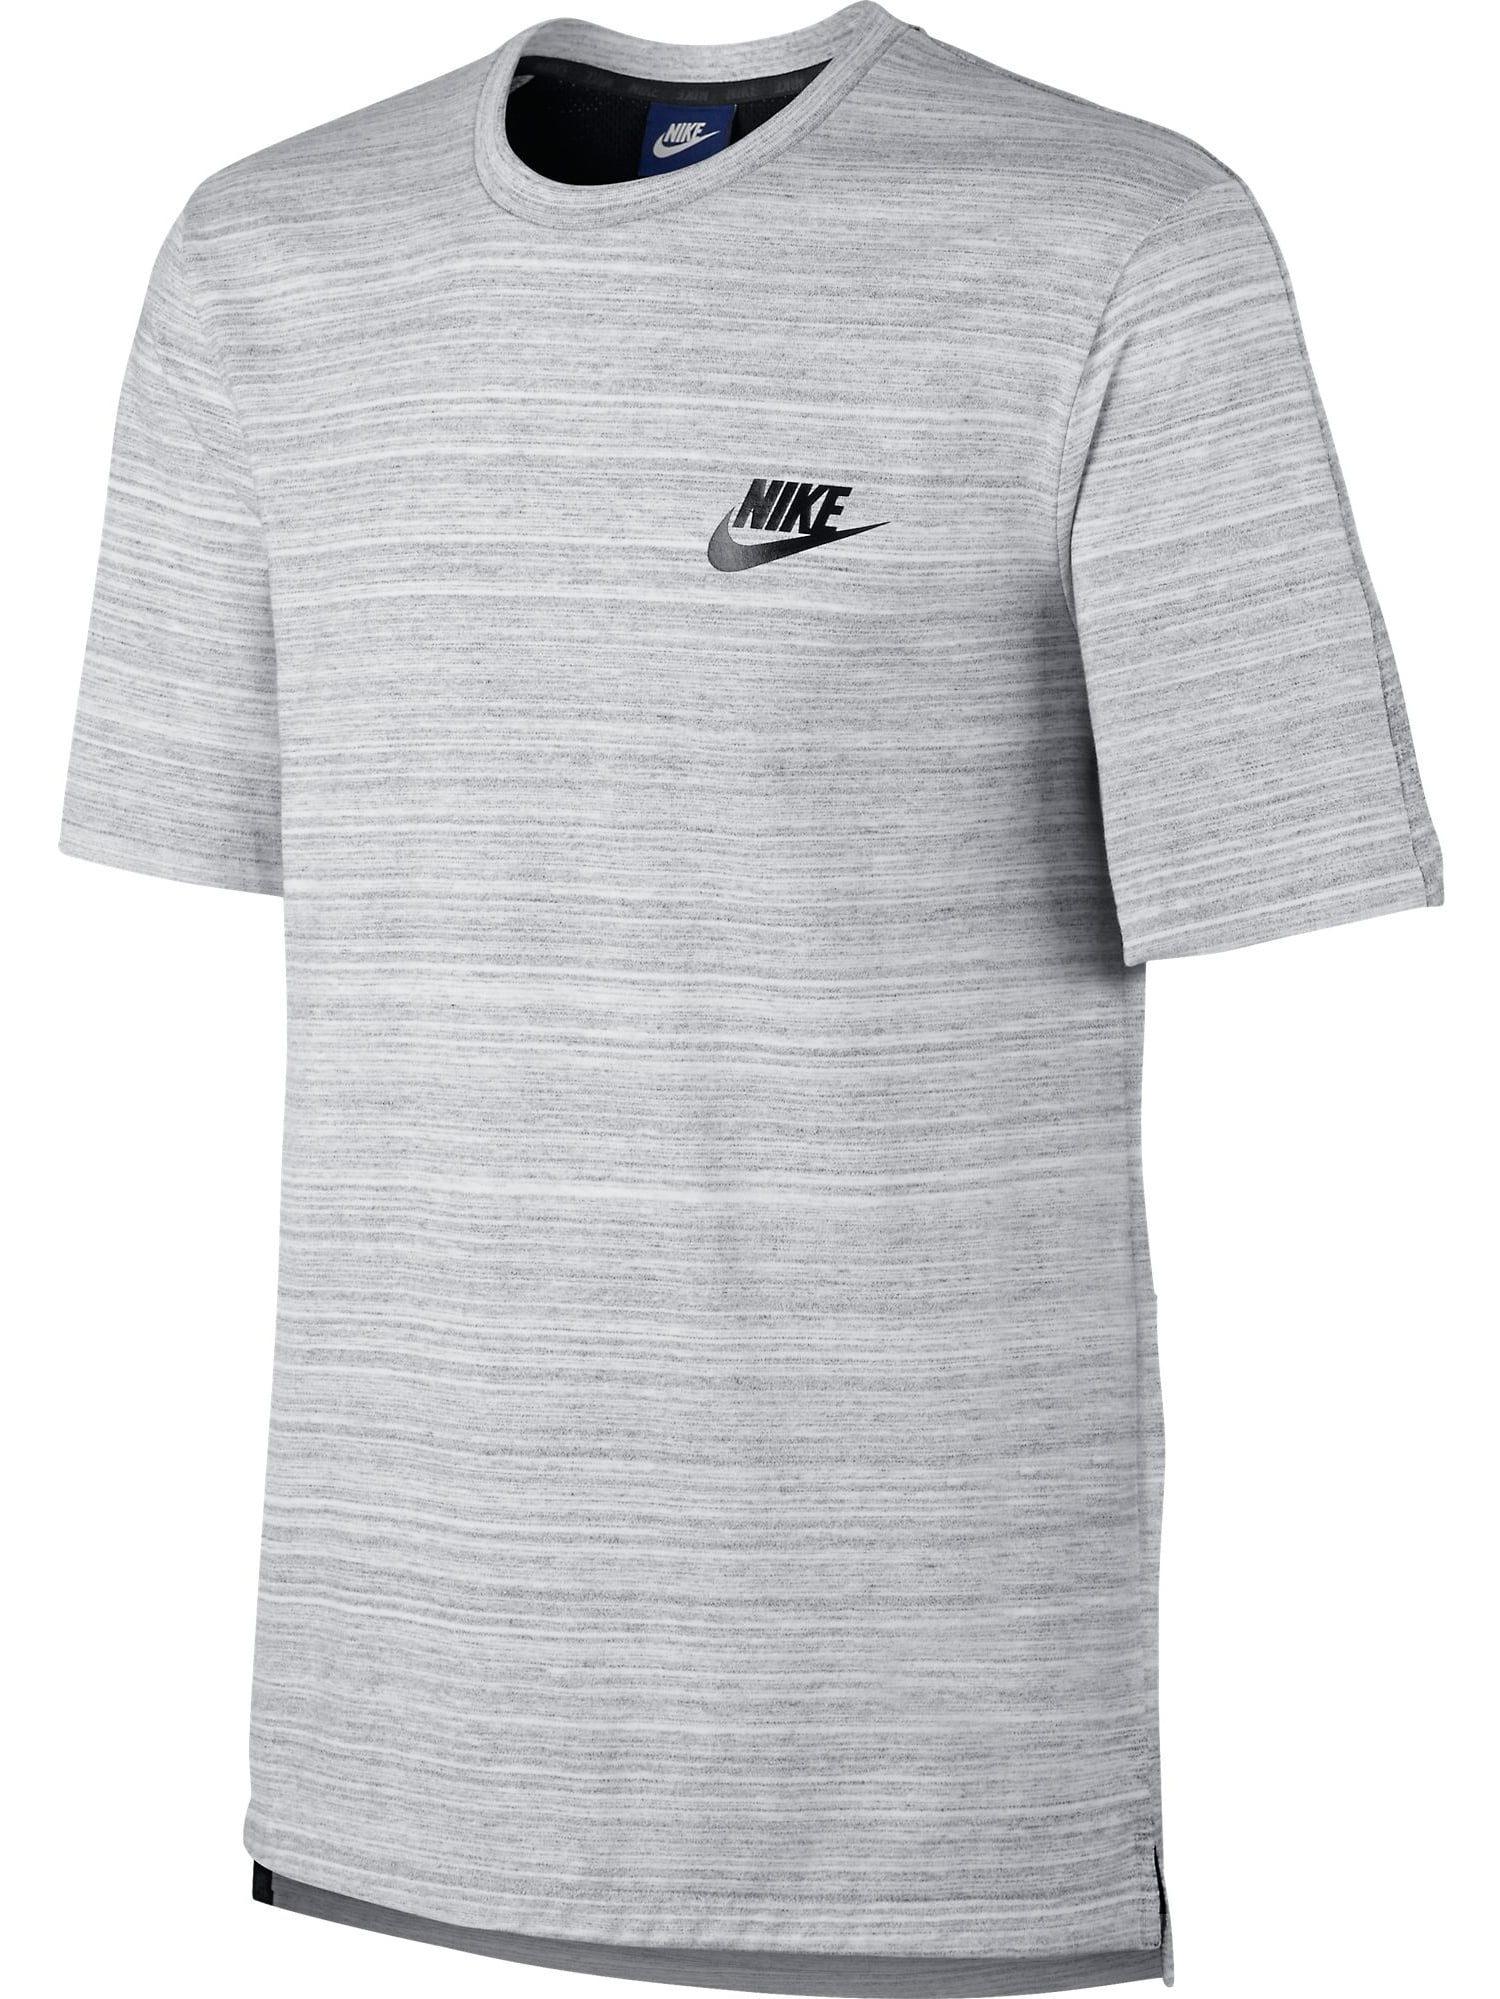 module Opera Geniet Nike Sportswear Advance 15 Men's T-Shirt White/Heather/Black 837010-100 -  Walmart.com